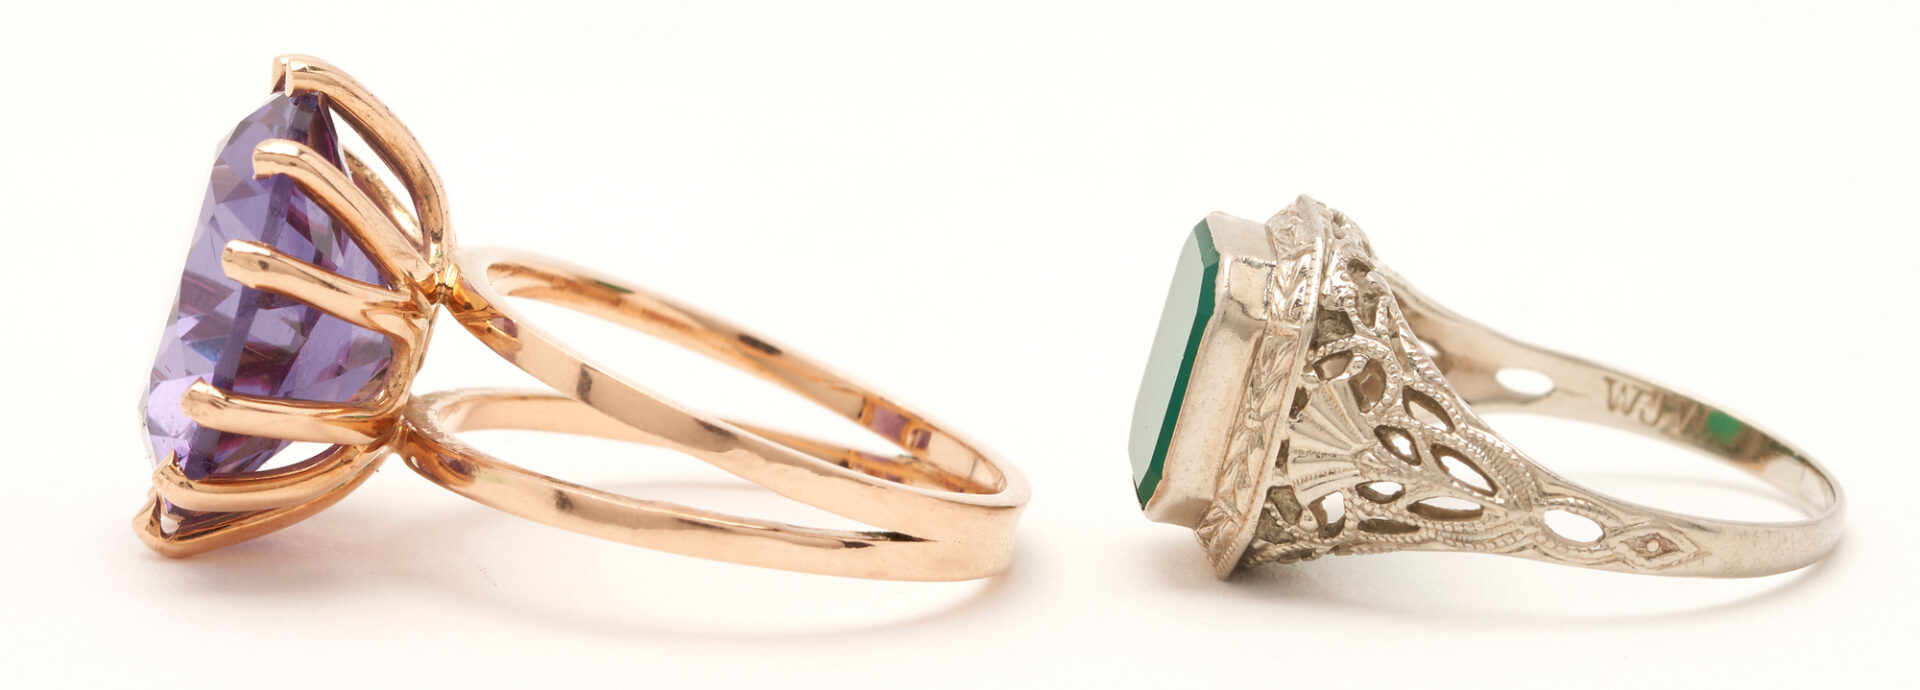 Lot 1179: 3 Ladies Jewelry Items: Marcus Diamond Watch & 2 14K Rings